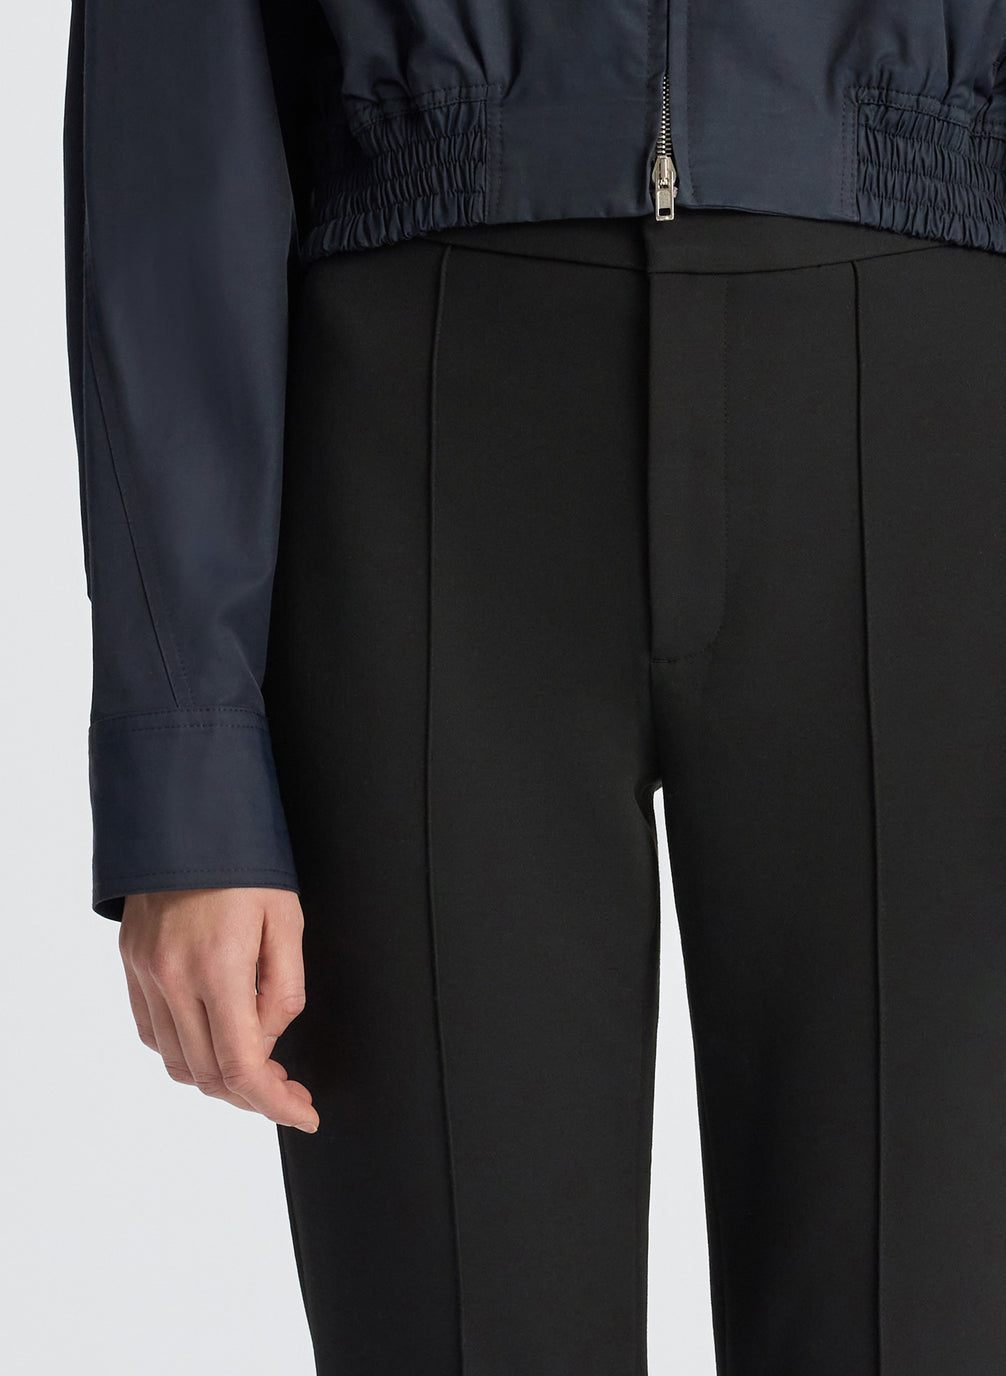 H&M Womens US 4 Ankle Length Stretch Dress Pants Business Slacks Navy Blue